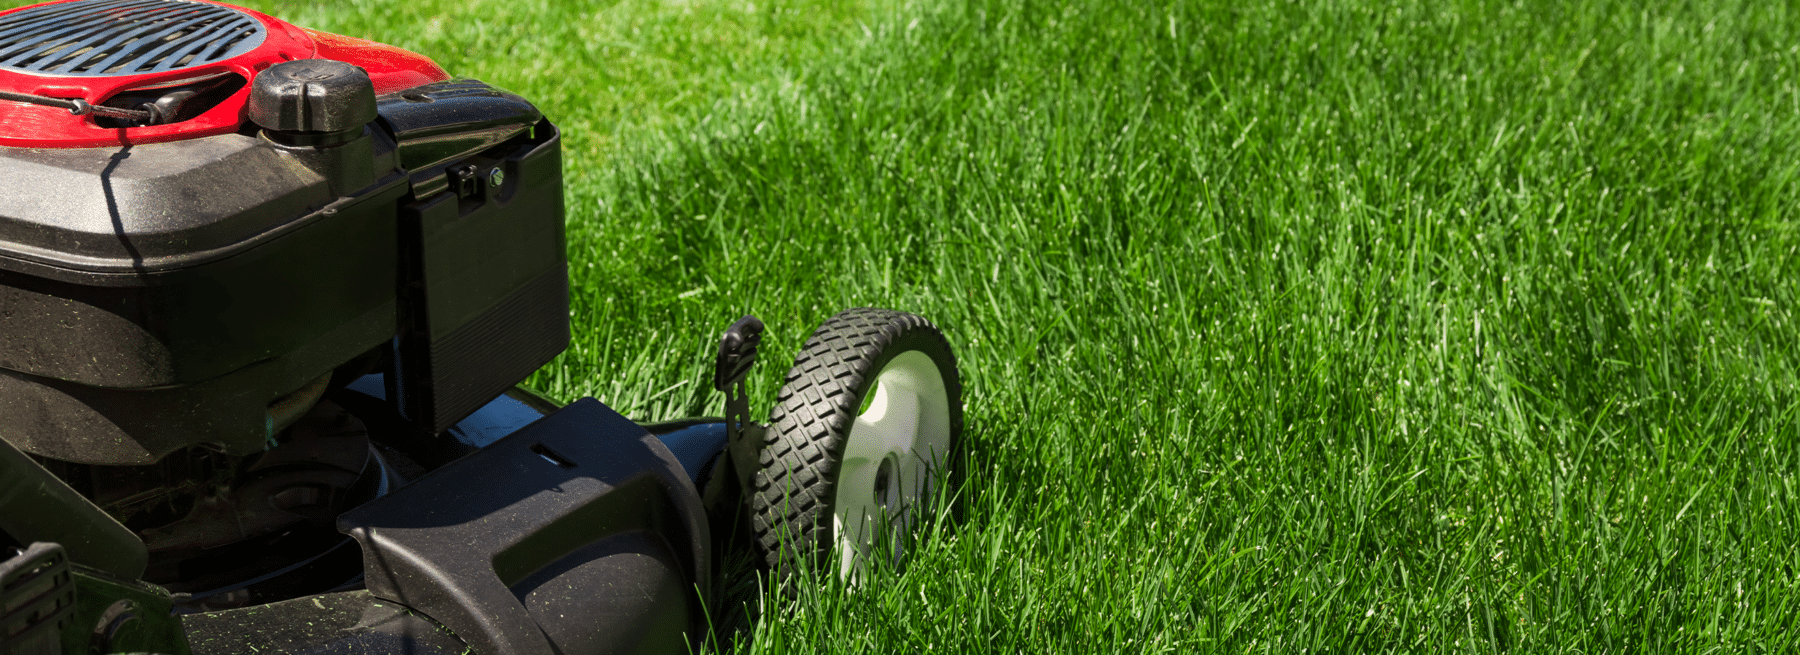 Prevent lawn equipment theft hero